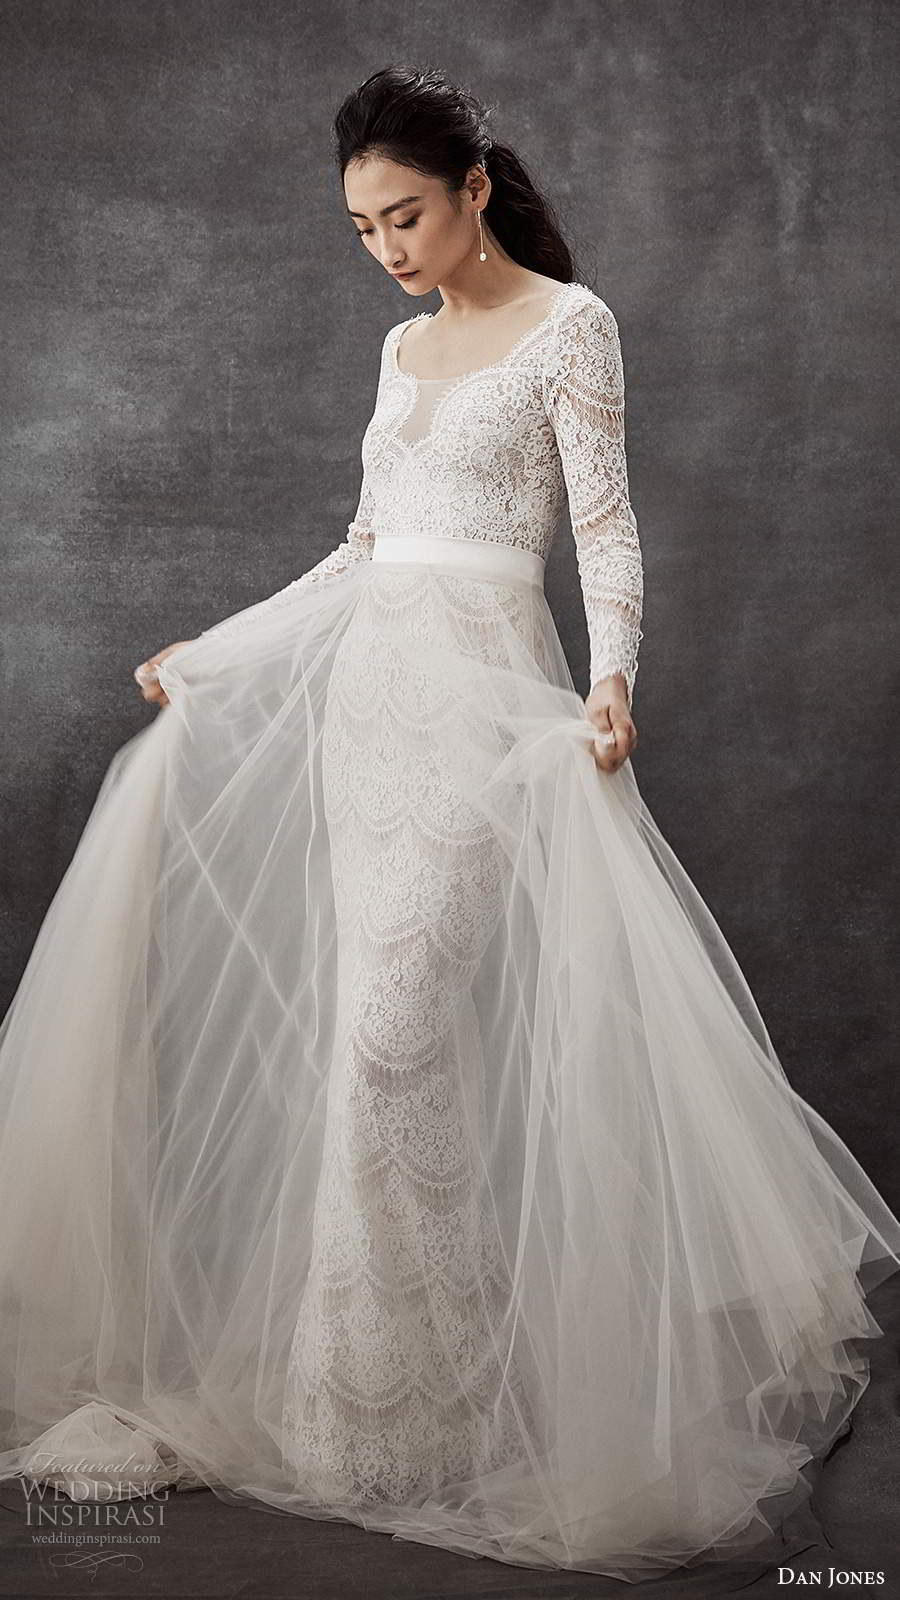 dan jones 2020 bridal illusion long sleeves v neckline lace sheath wedding dress sweep train a line overskirt (3) sv